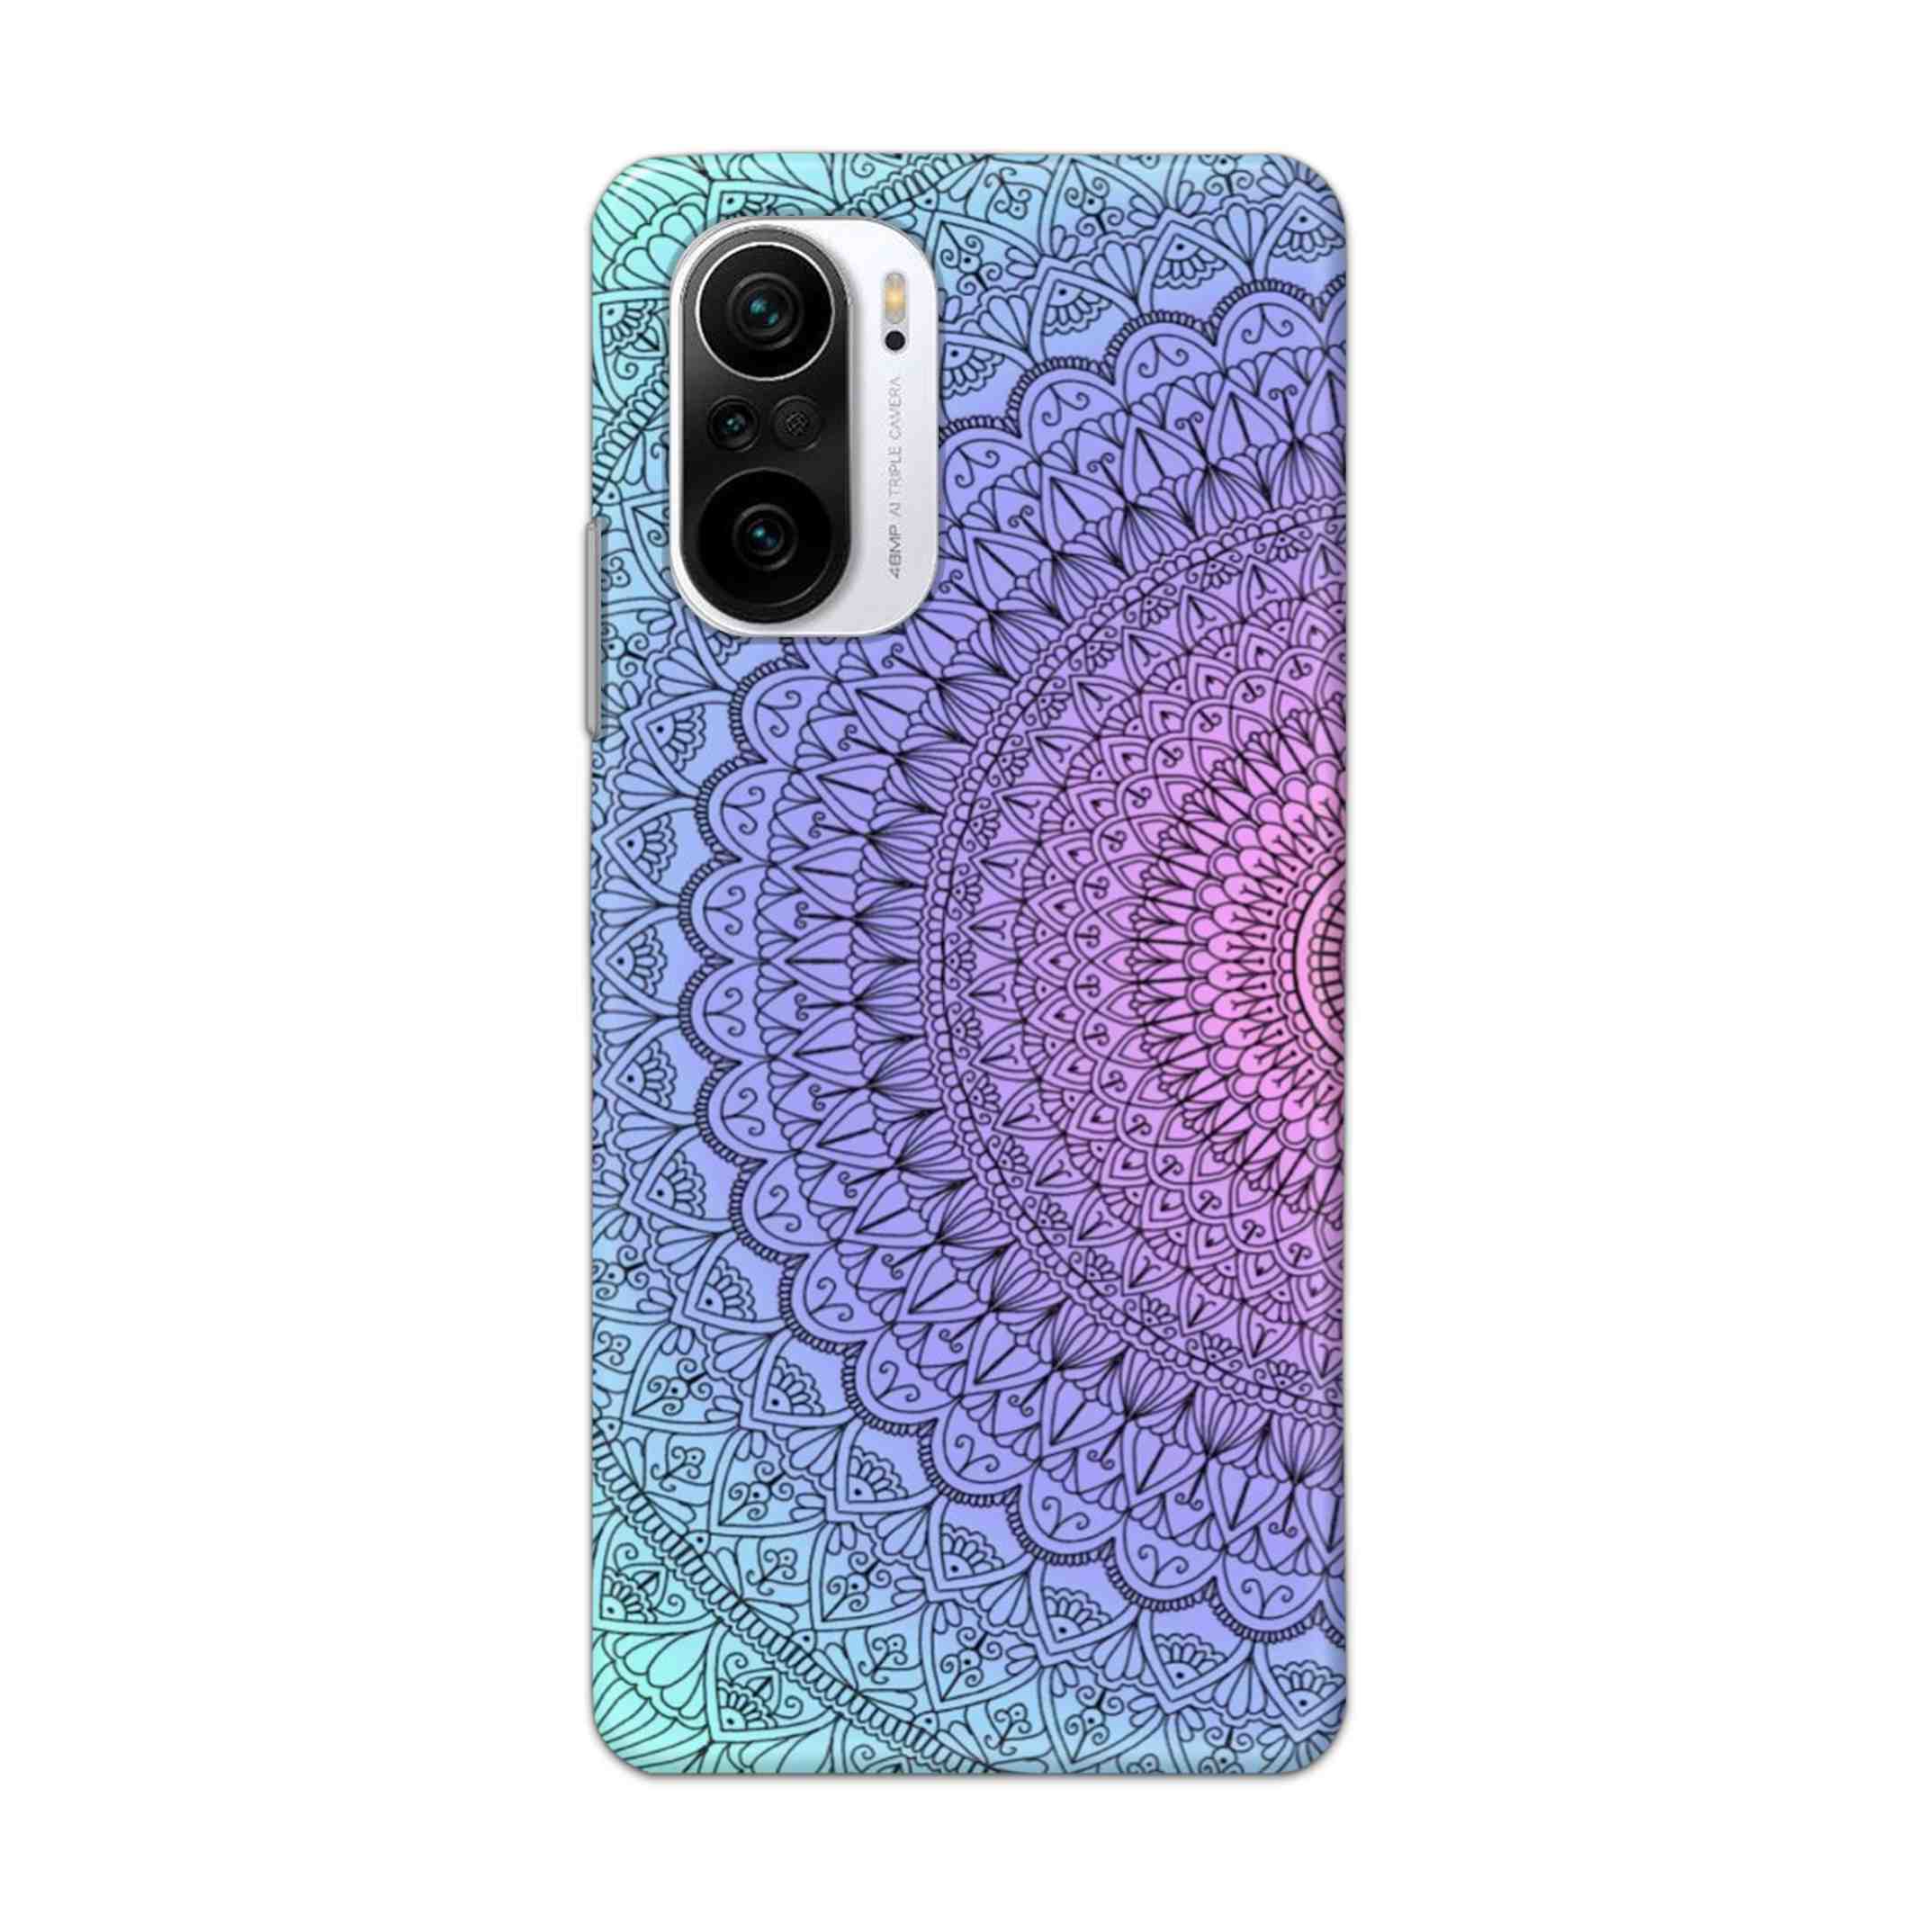 Buy Colourful Mandala Hard Back Mobile Phone Case Cover For Mi 11X Online